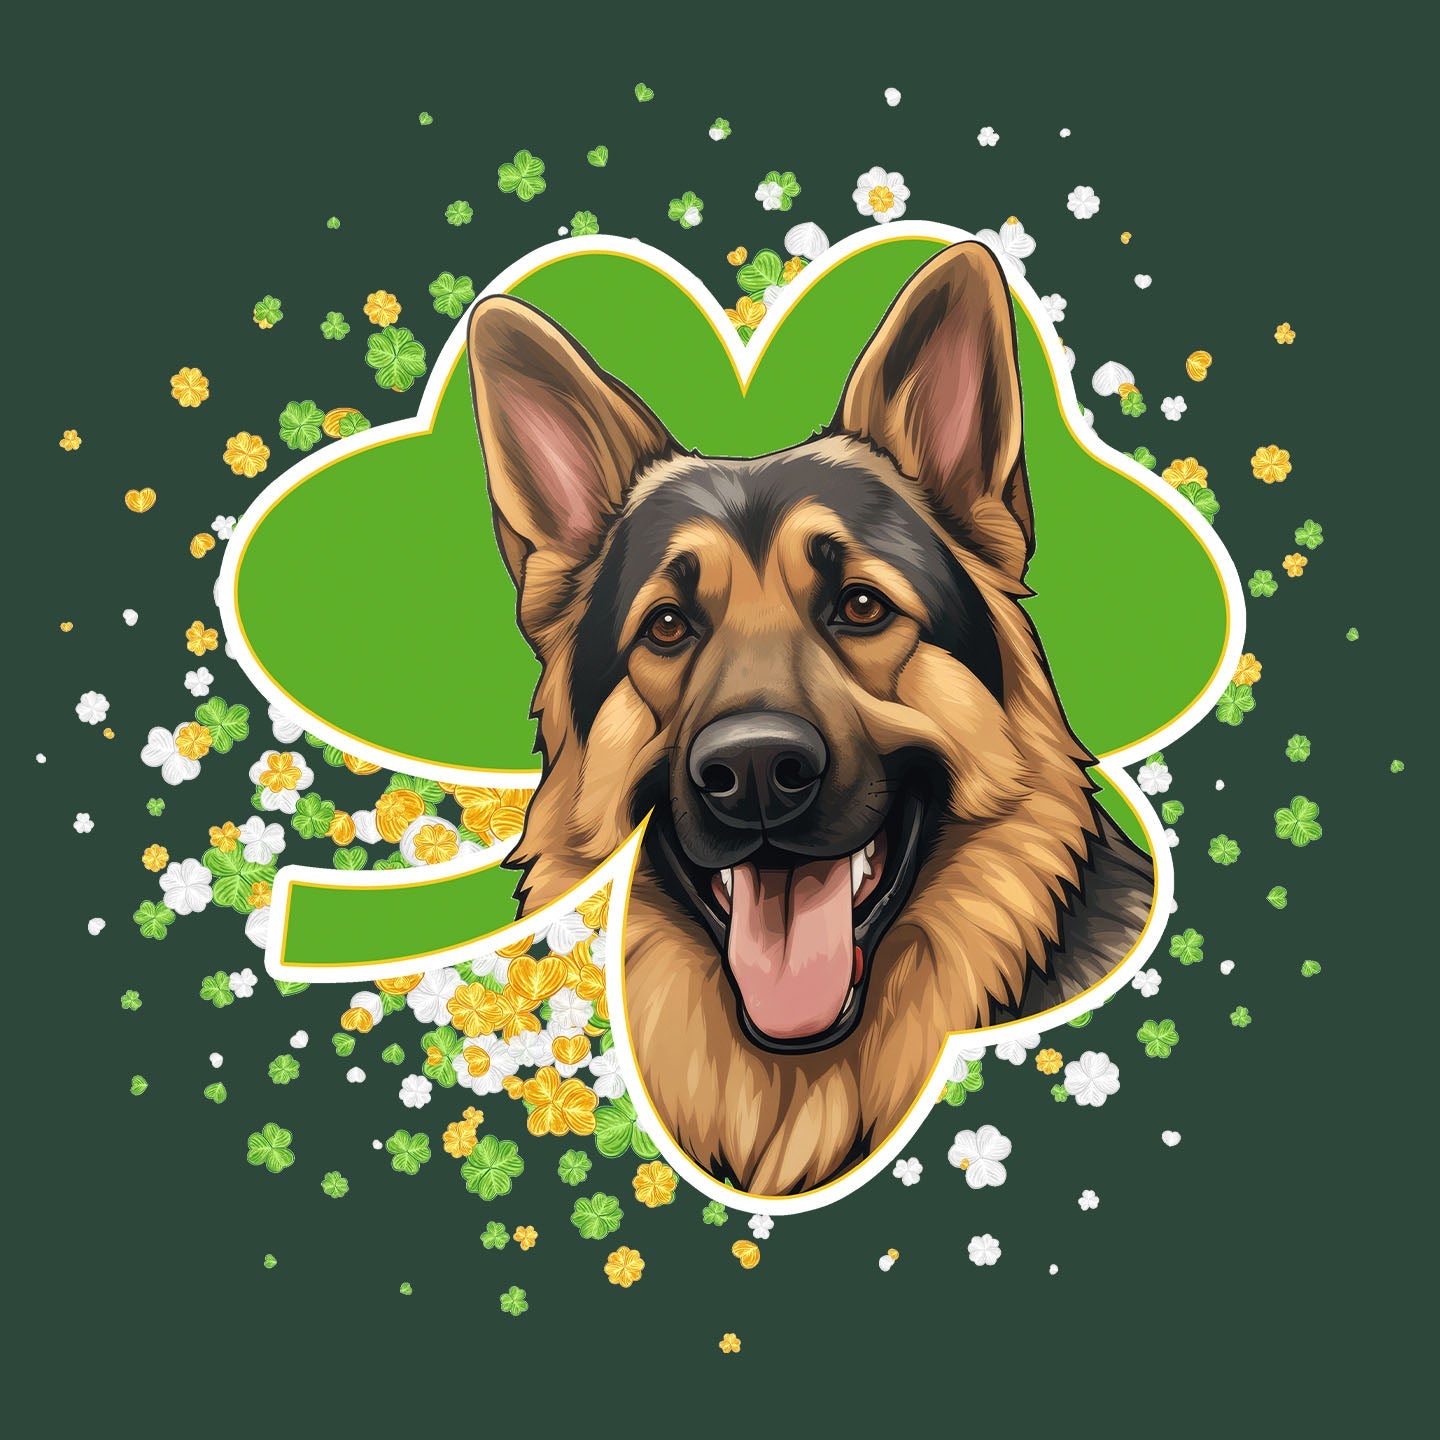 Big Clover St. Patrick's Day German Shepherd Dog - Adult Unisex T-Shirt